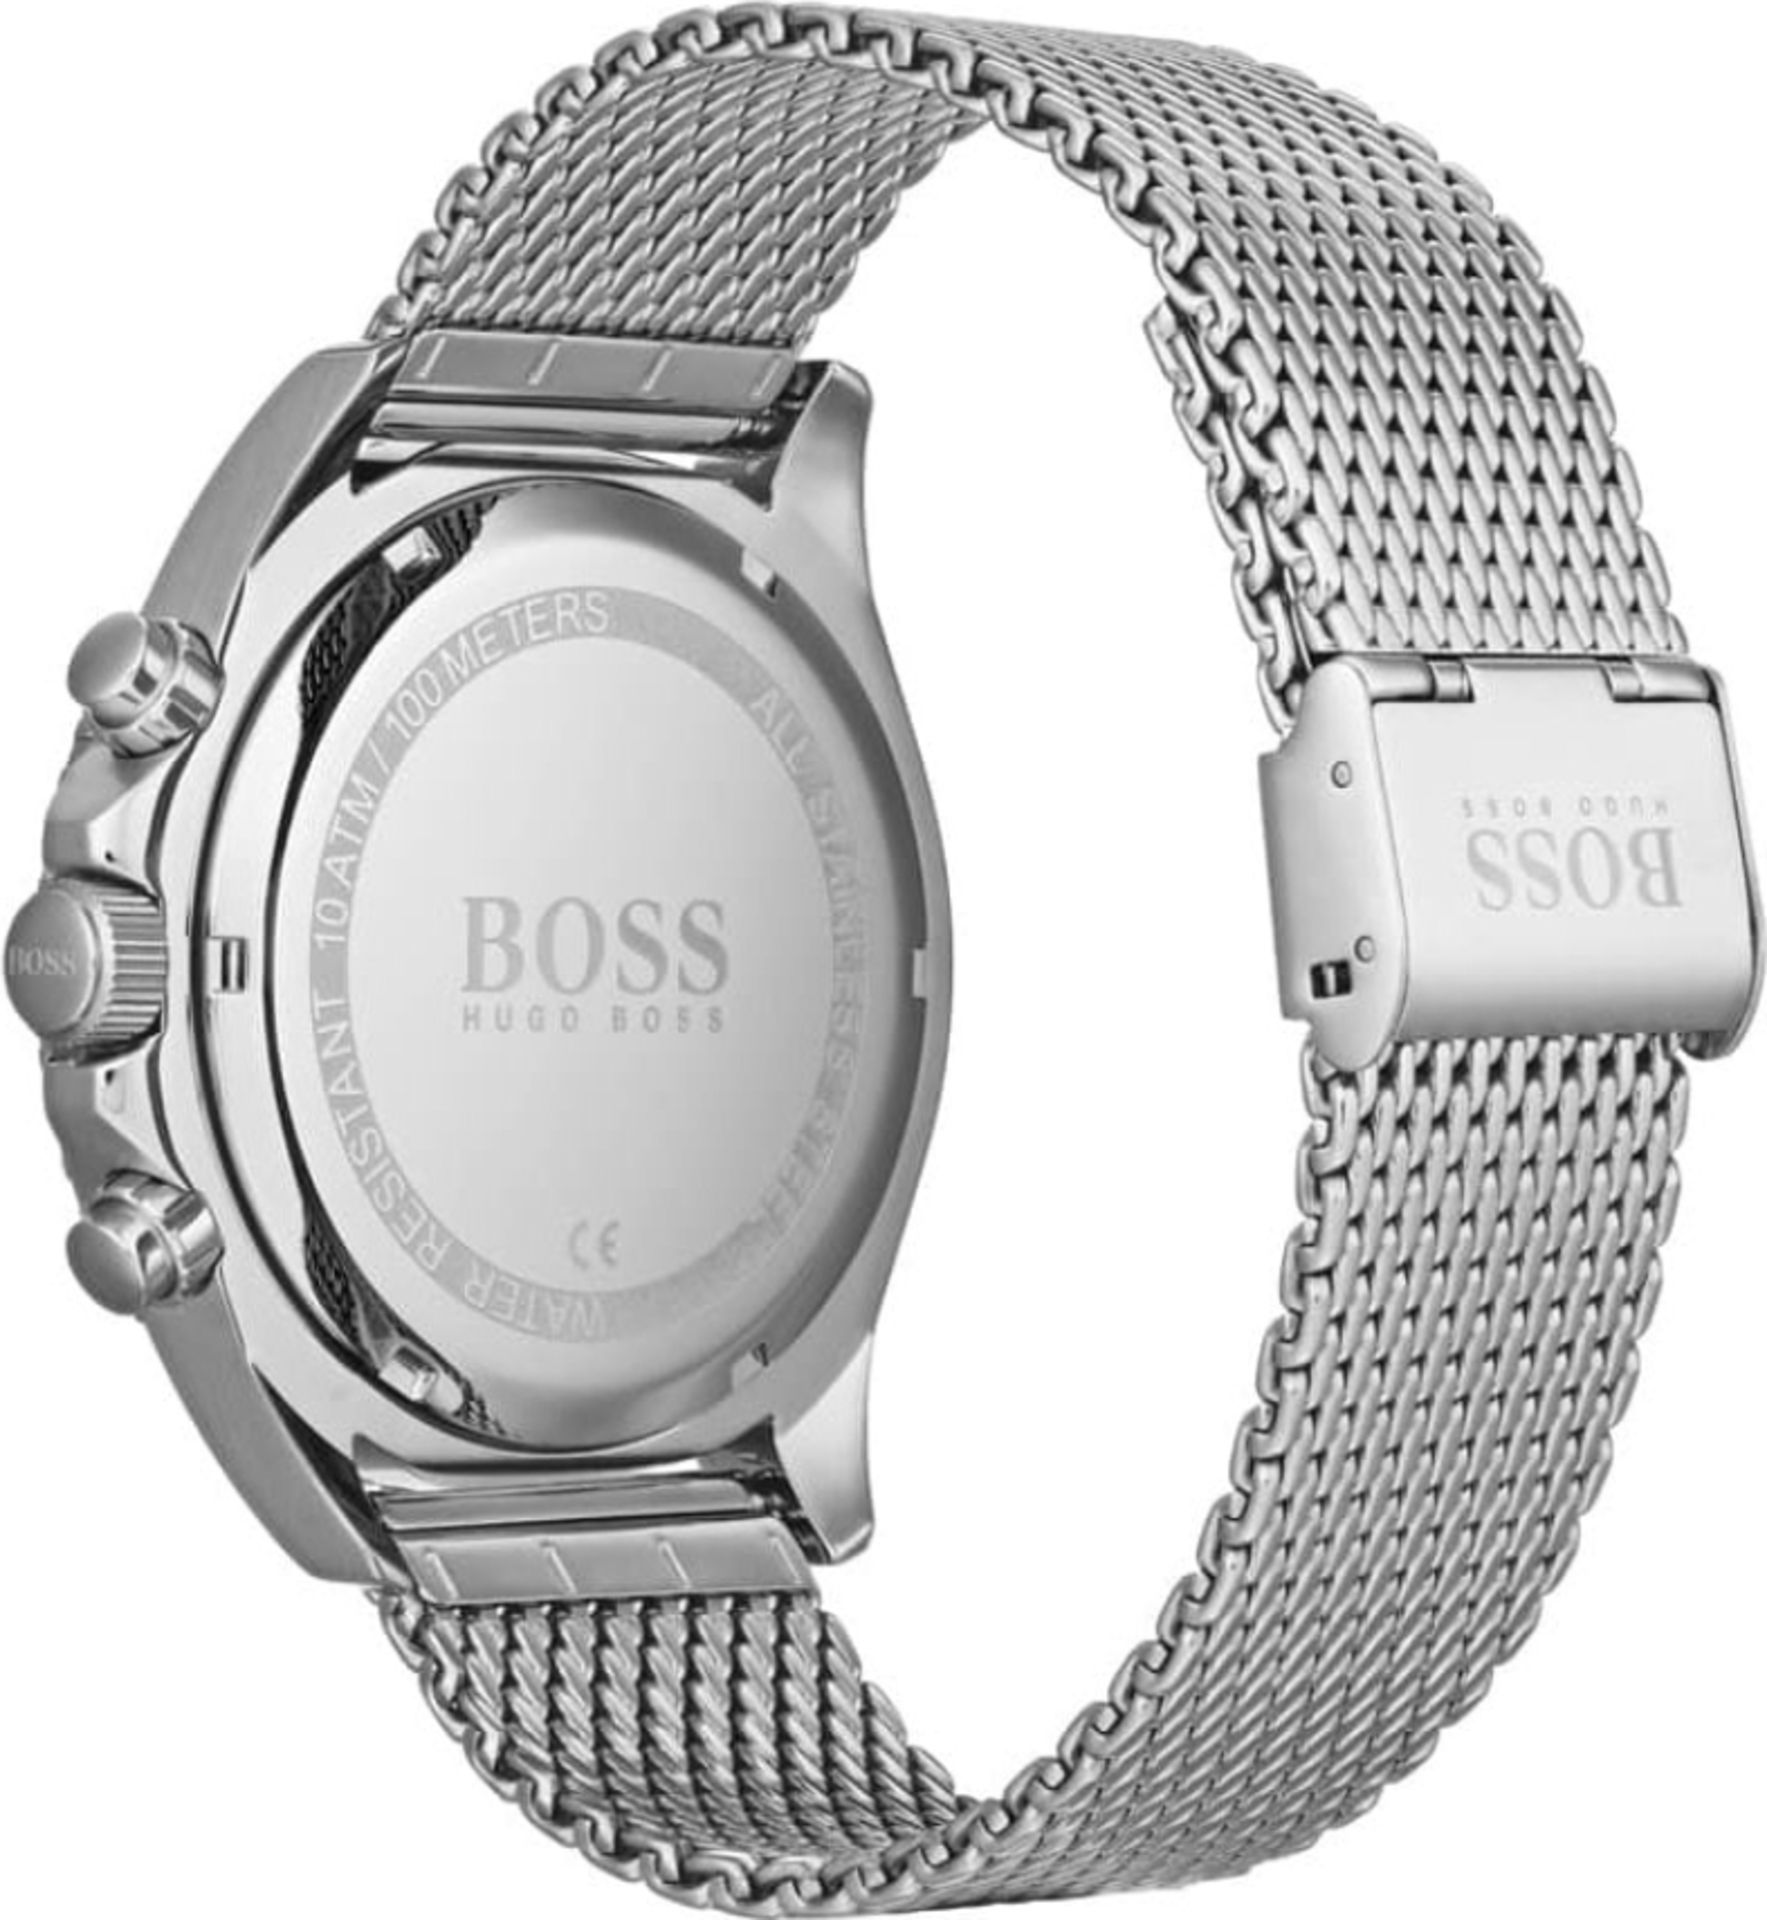 Hugo Boss 1513701 Men's Ocean Edition Black Dial Silver Mesh Band Chronograph Watch - Image 6 of 8